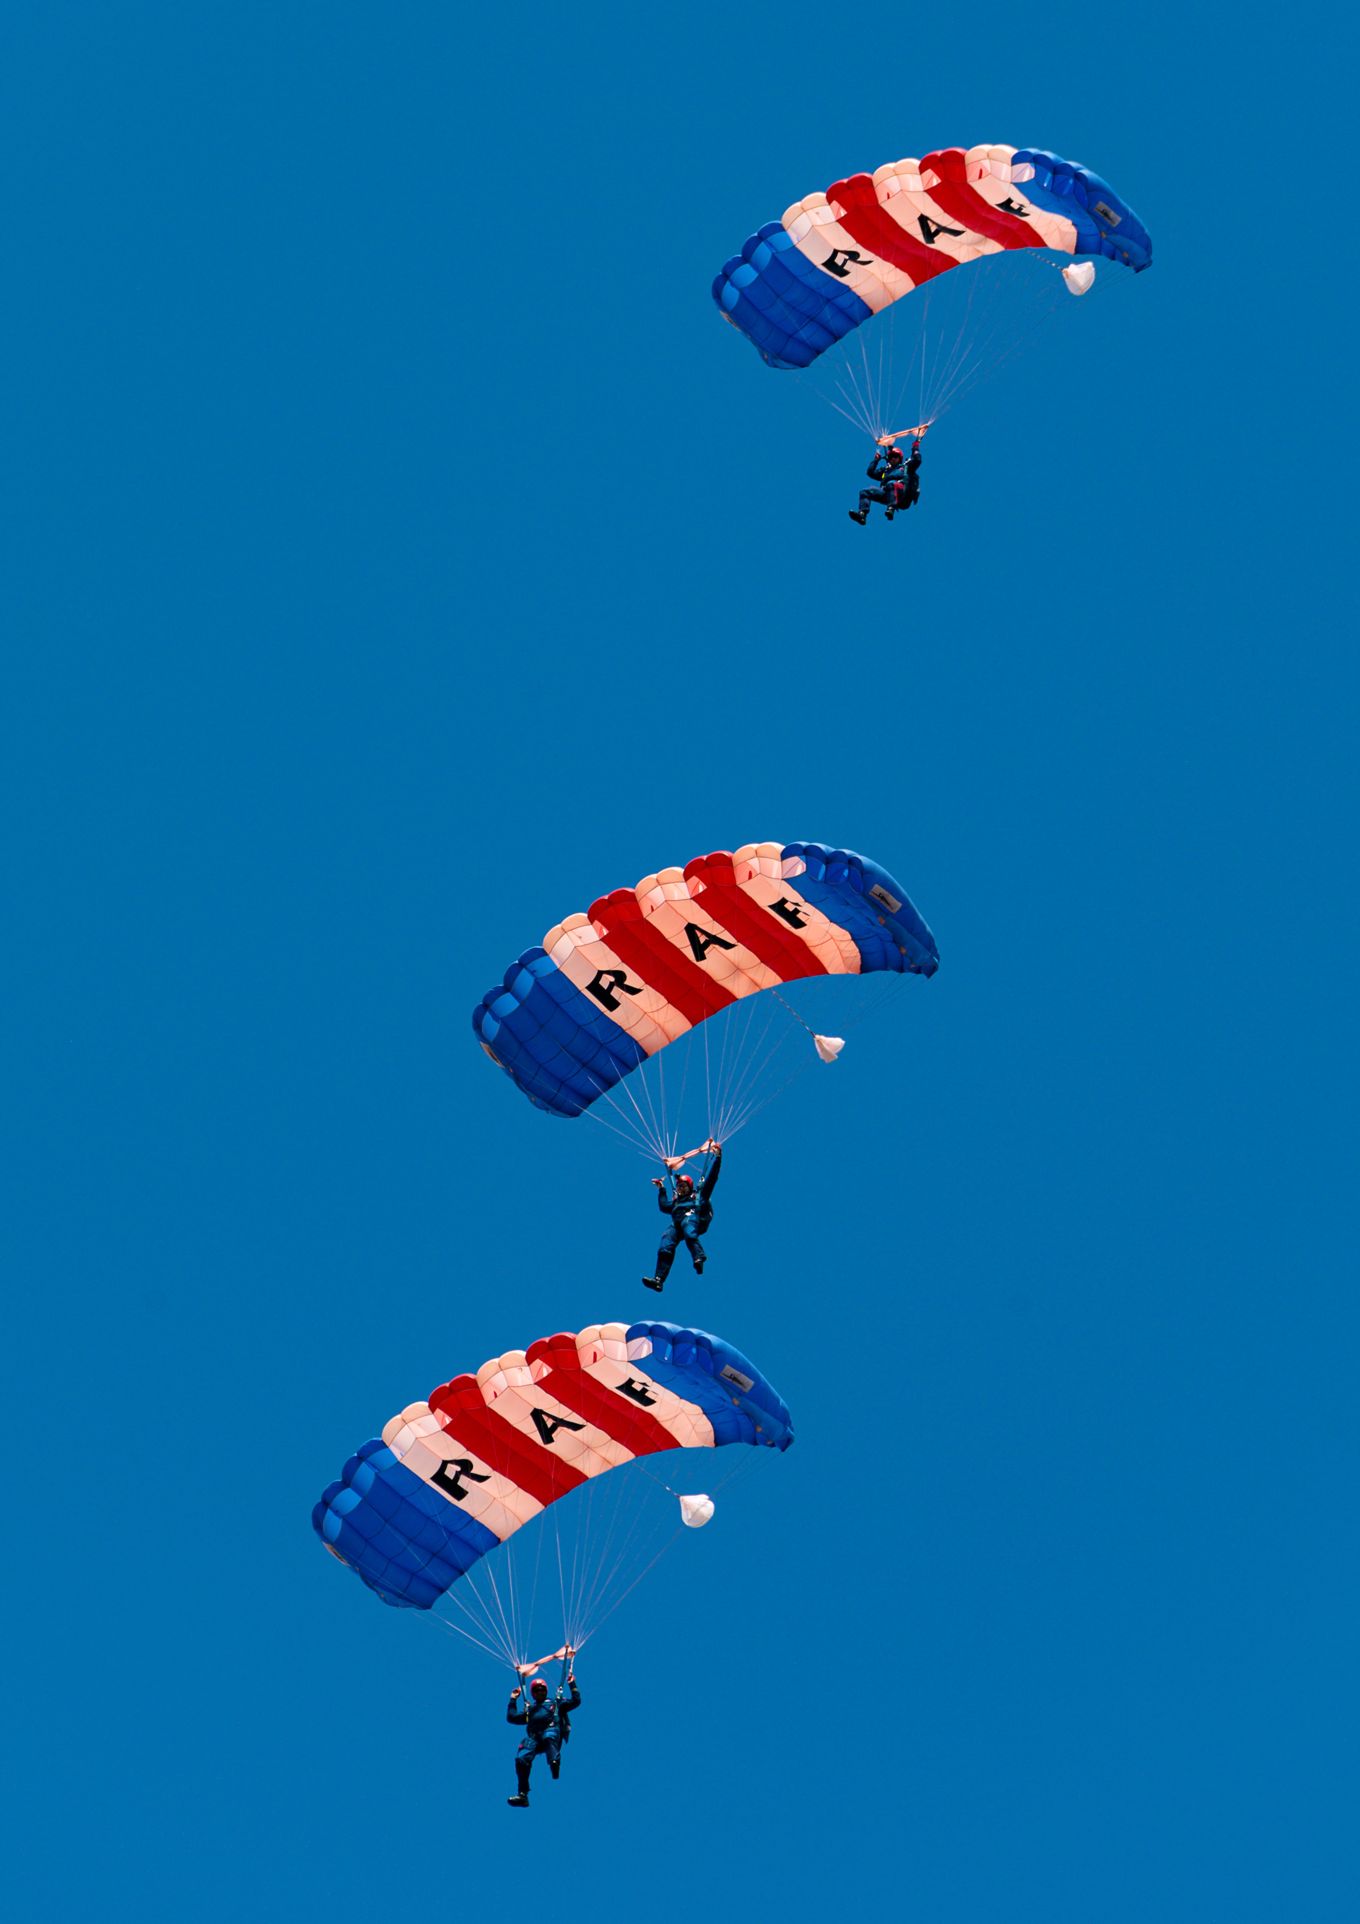 The RAF Falcons Parachute Display Team during their training in summer 2020